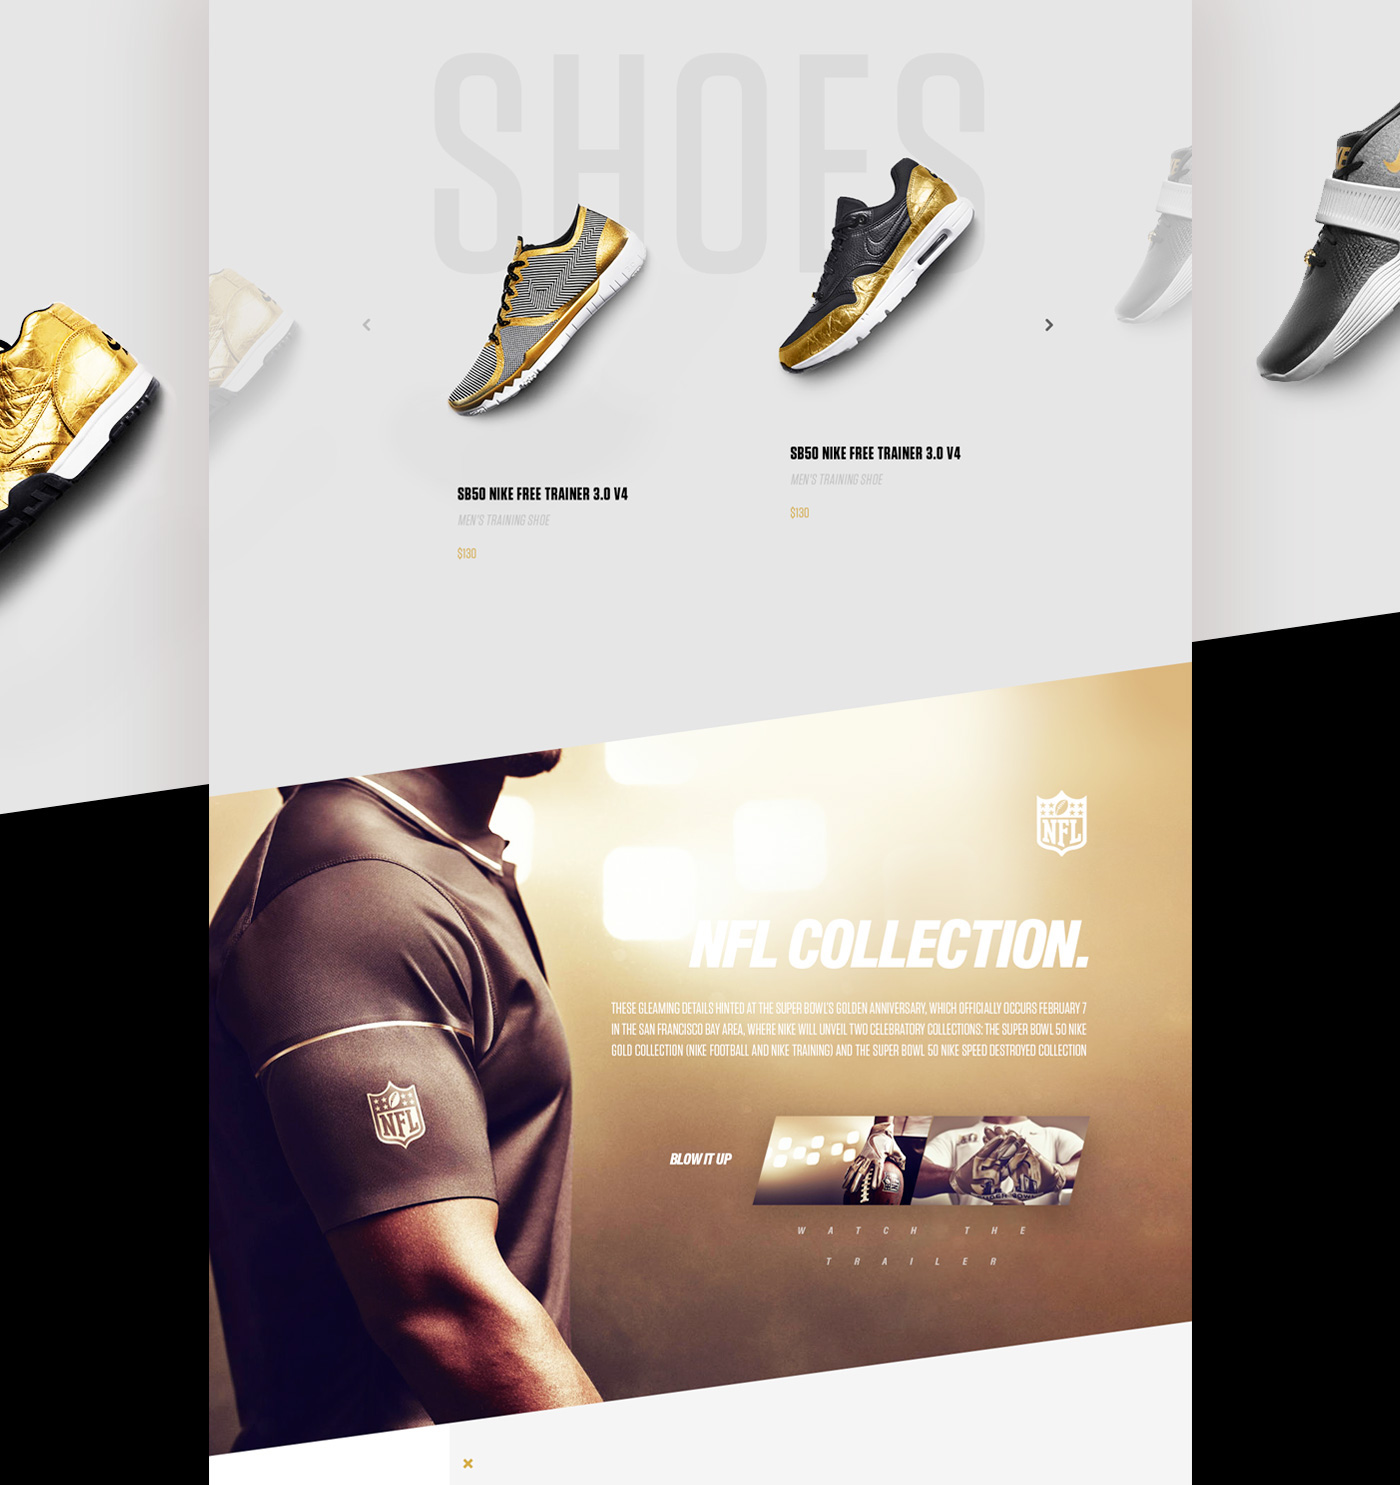 Nike superbowl design Webdesign Layout Interface art direction  visual sport template